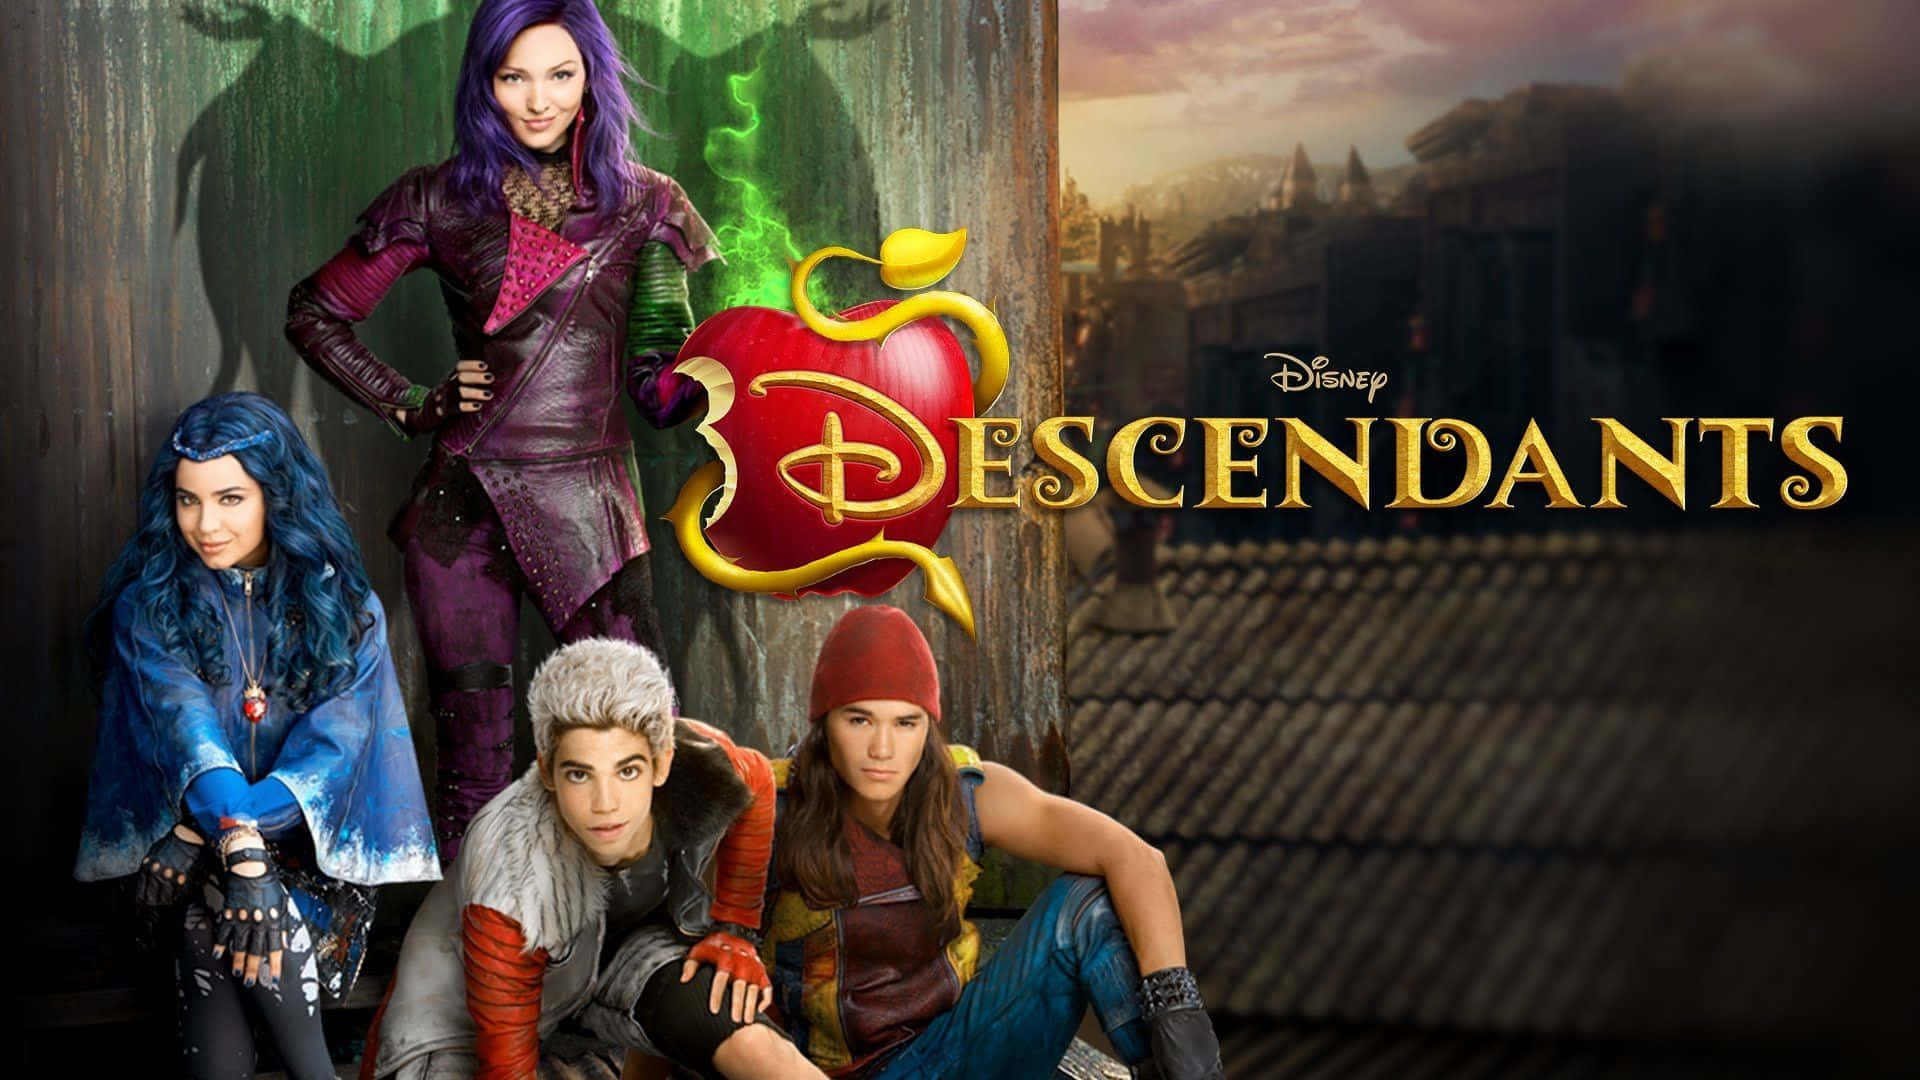 The Descendants Movie Cast Posing Together